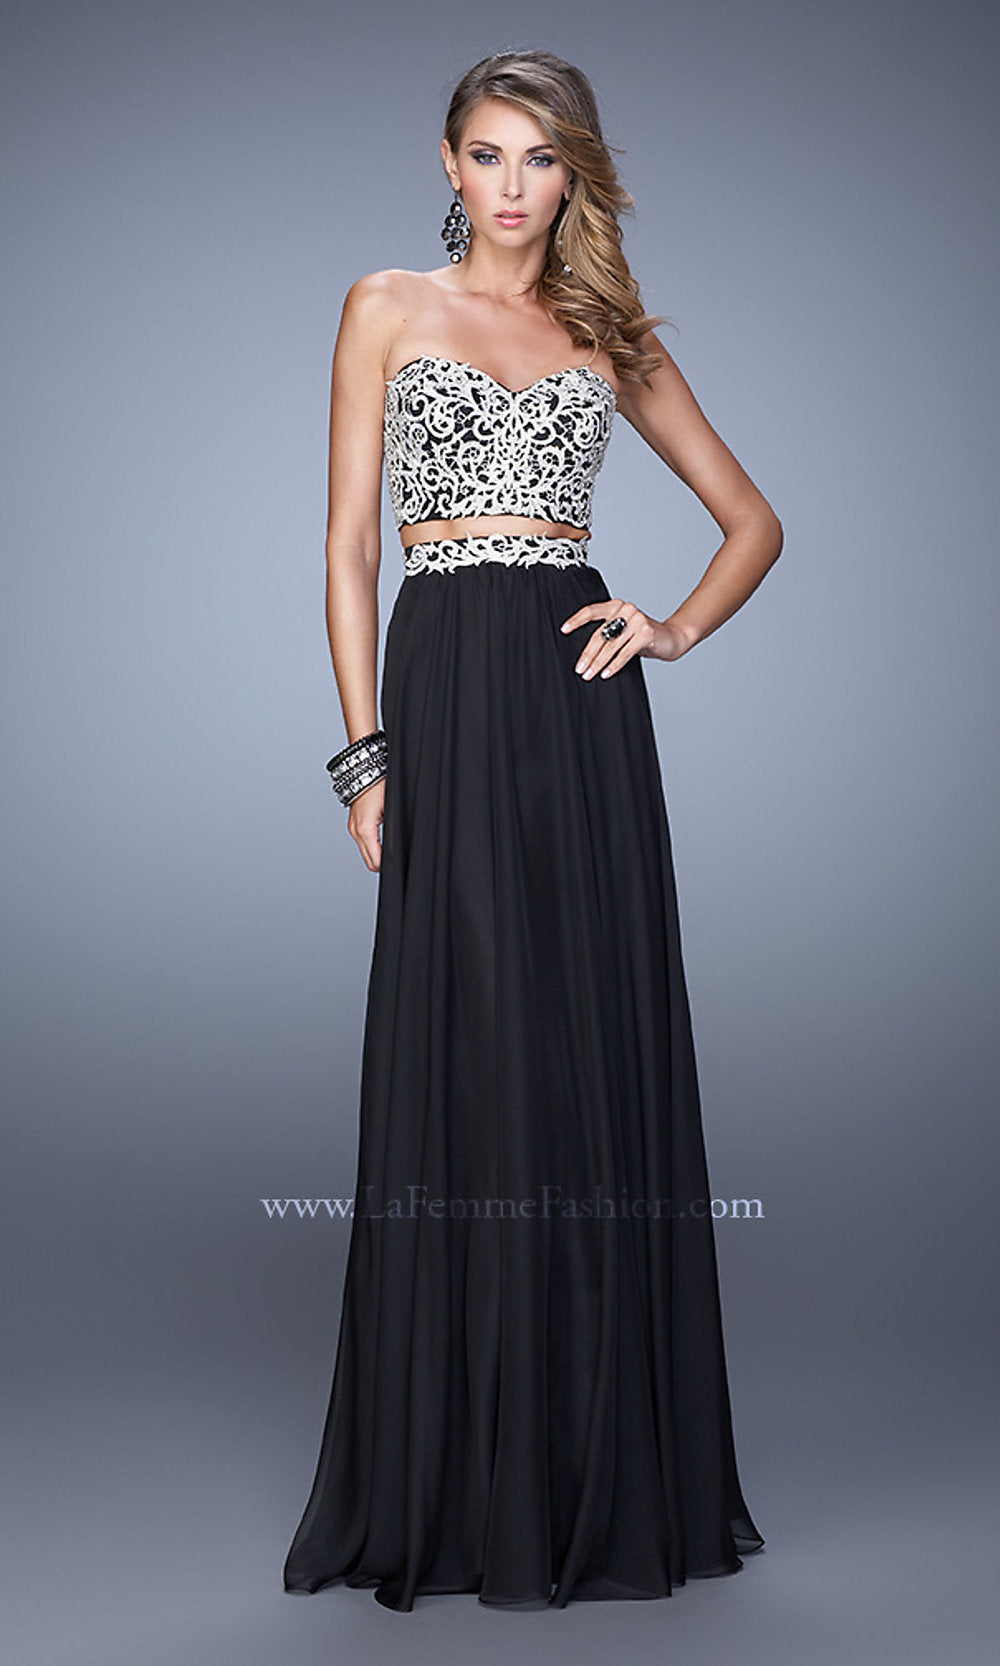 Black Long Two-Piece La Femme Designer Prom Dress